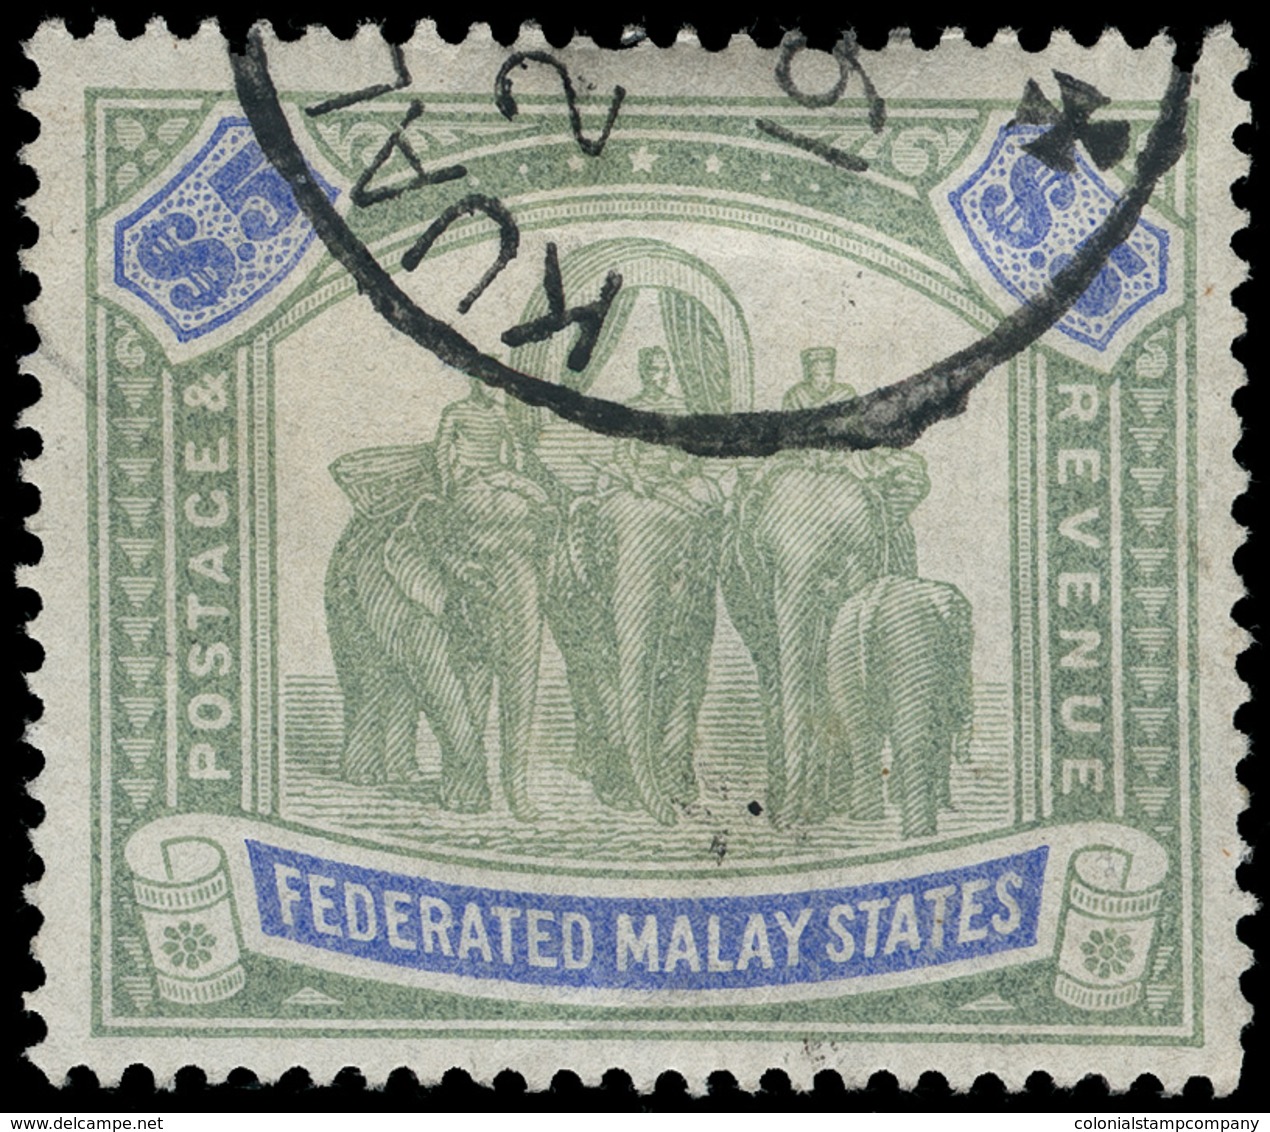 O Malaya (Federated States) - Lot No.840 - Postage Due